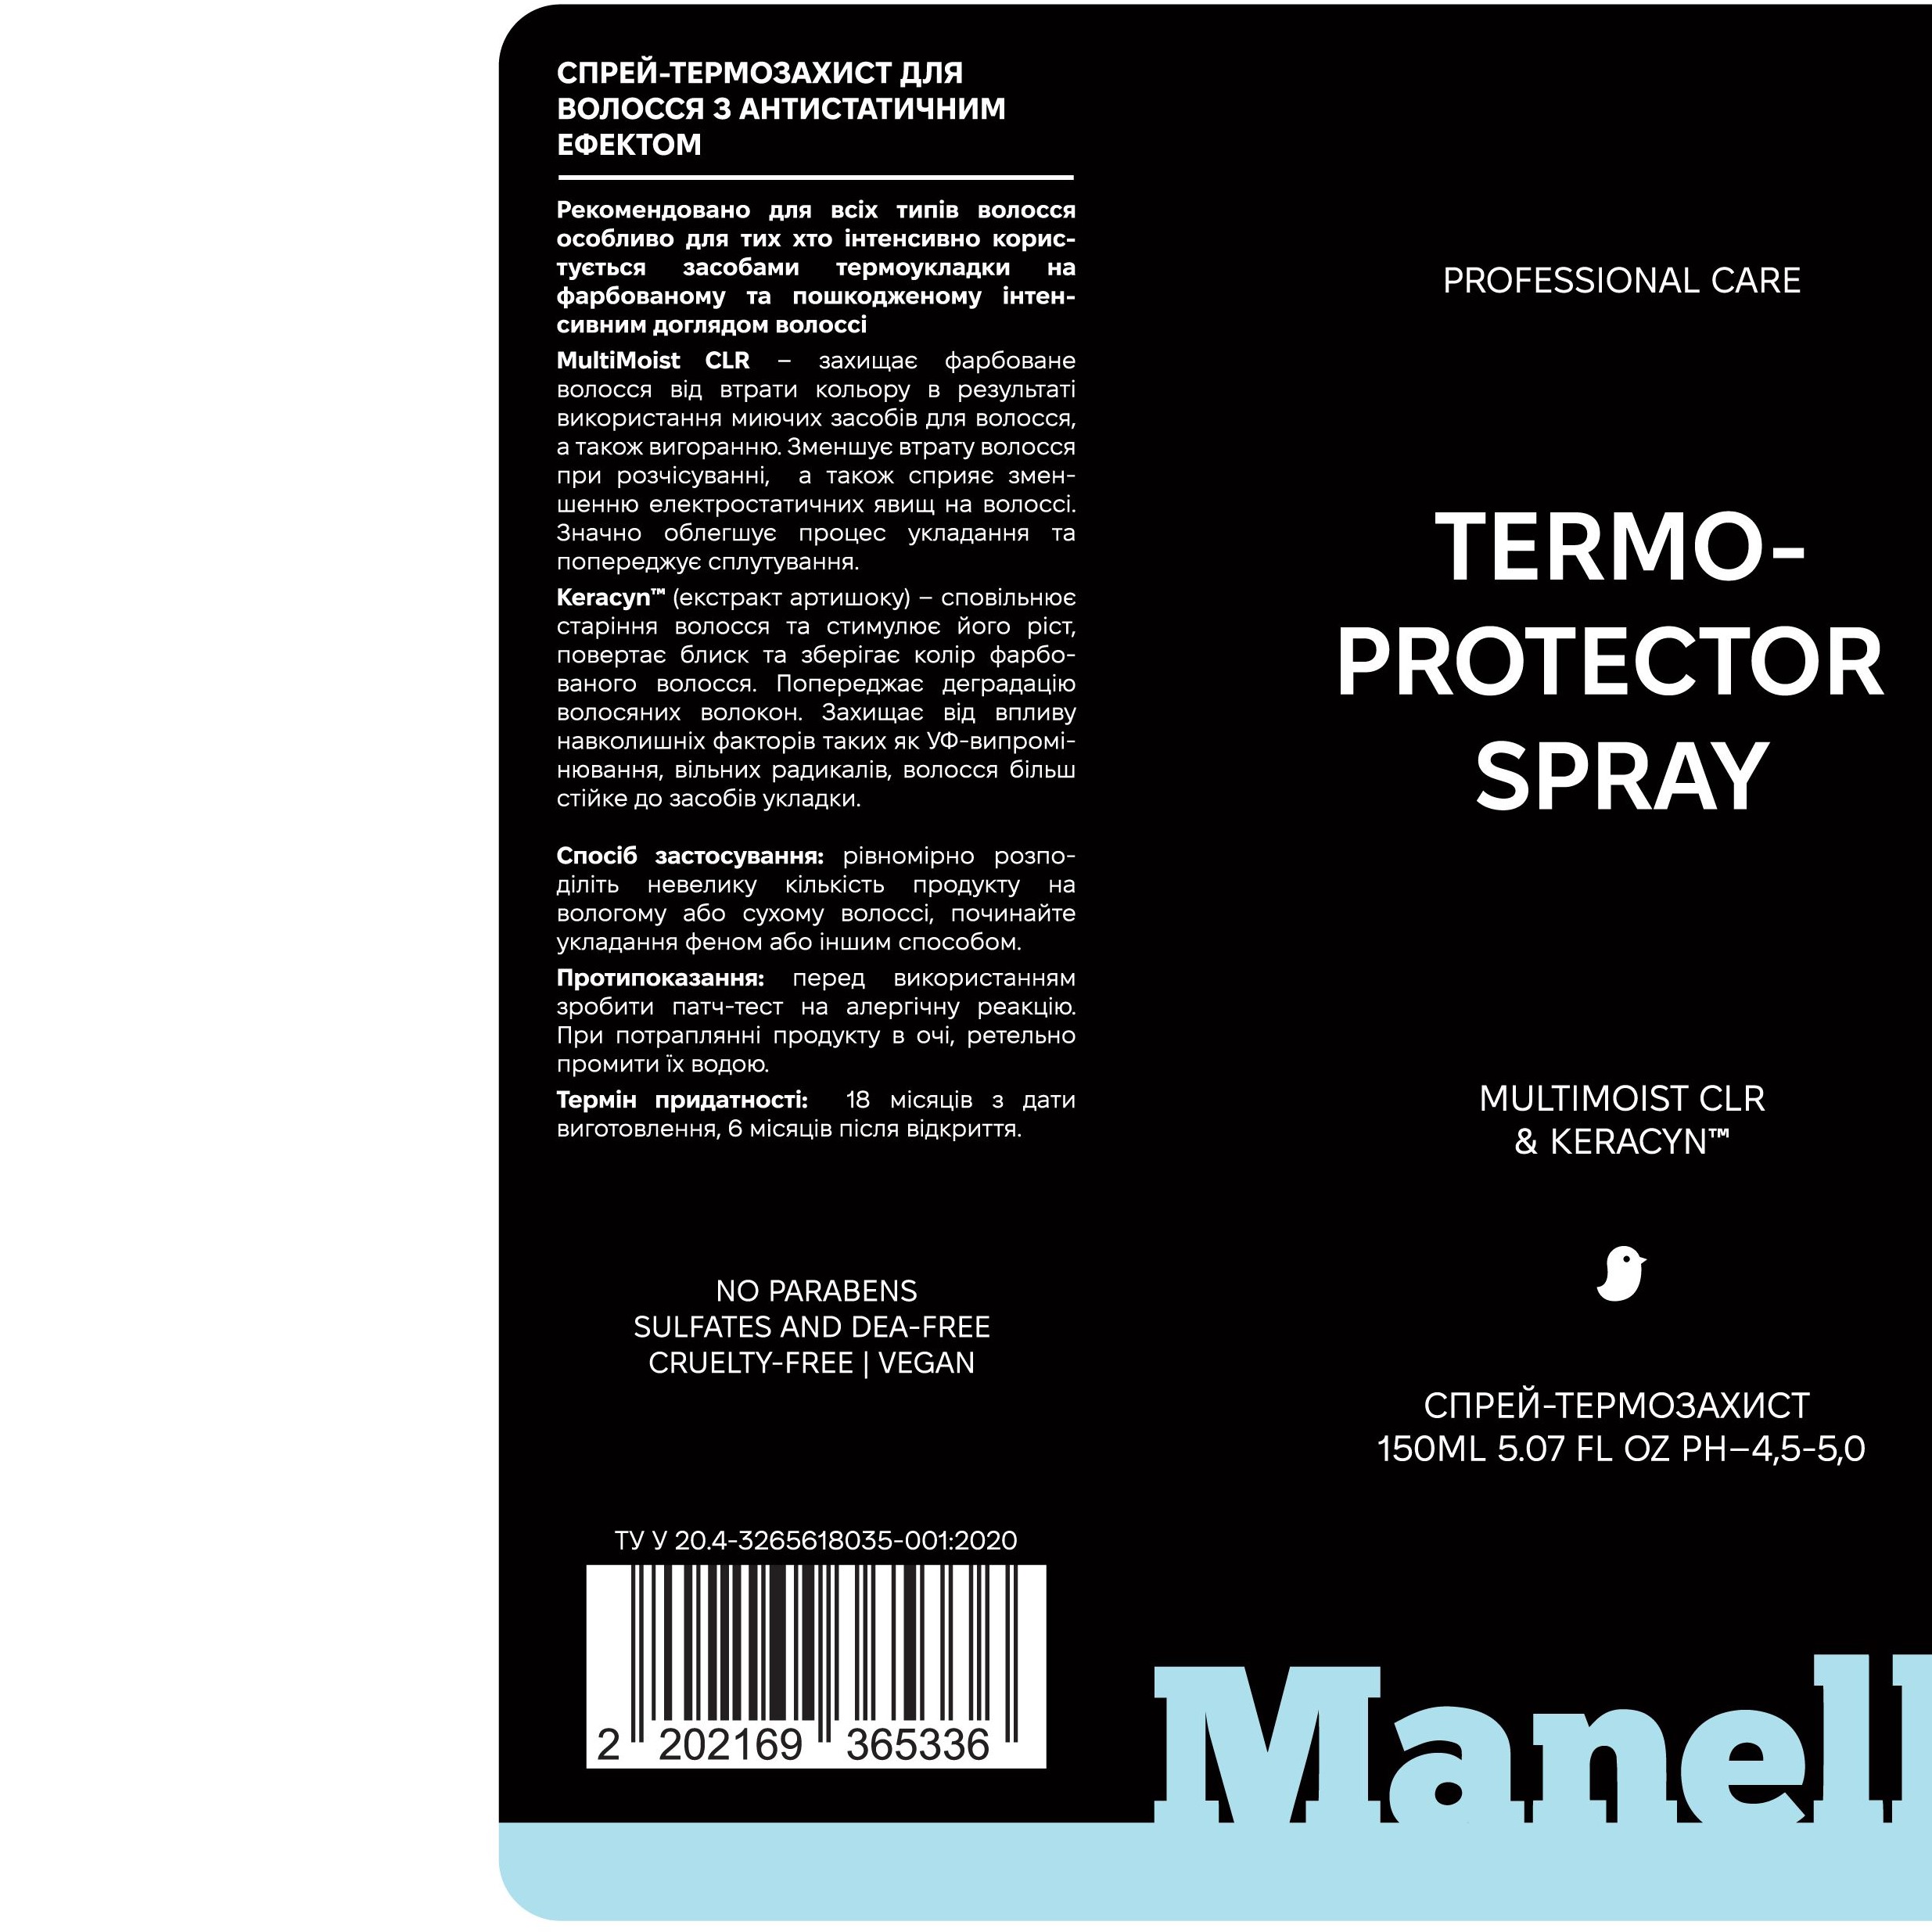 Спрей-термозахист Manelle Professional care MultiMoist CLR & Keracyn 150 мл - фото 3